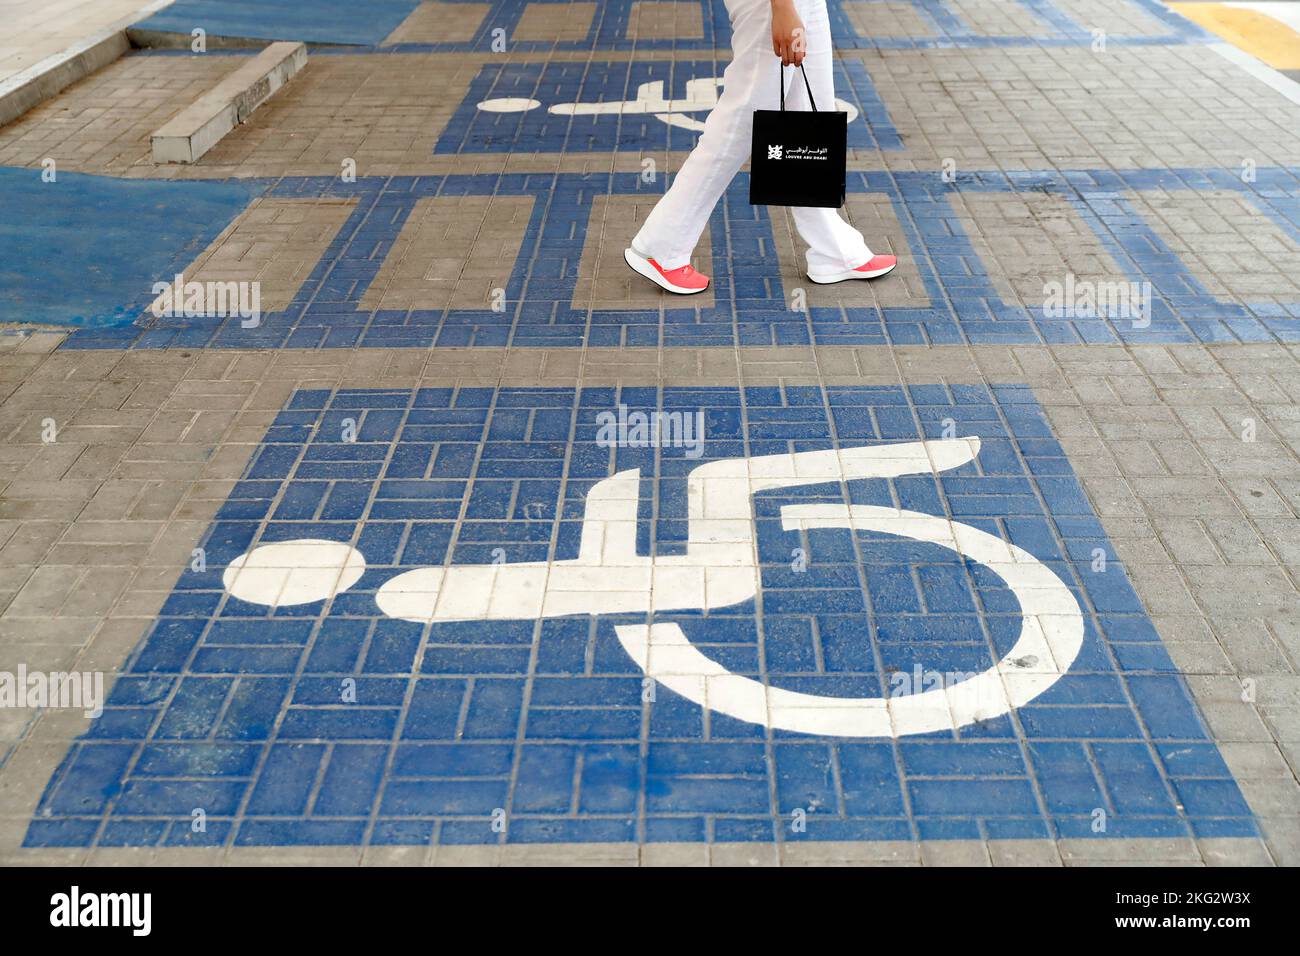 Handicapped disabled sign parking on road. Abu Dhabi. United Arab Emirates. Stock Photo